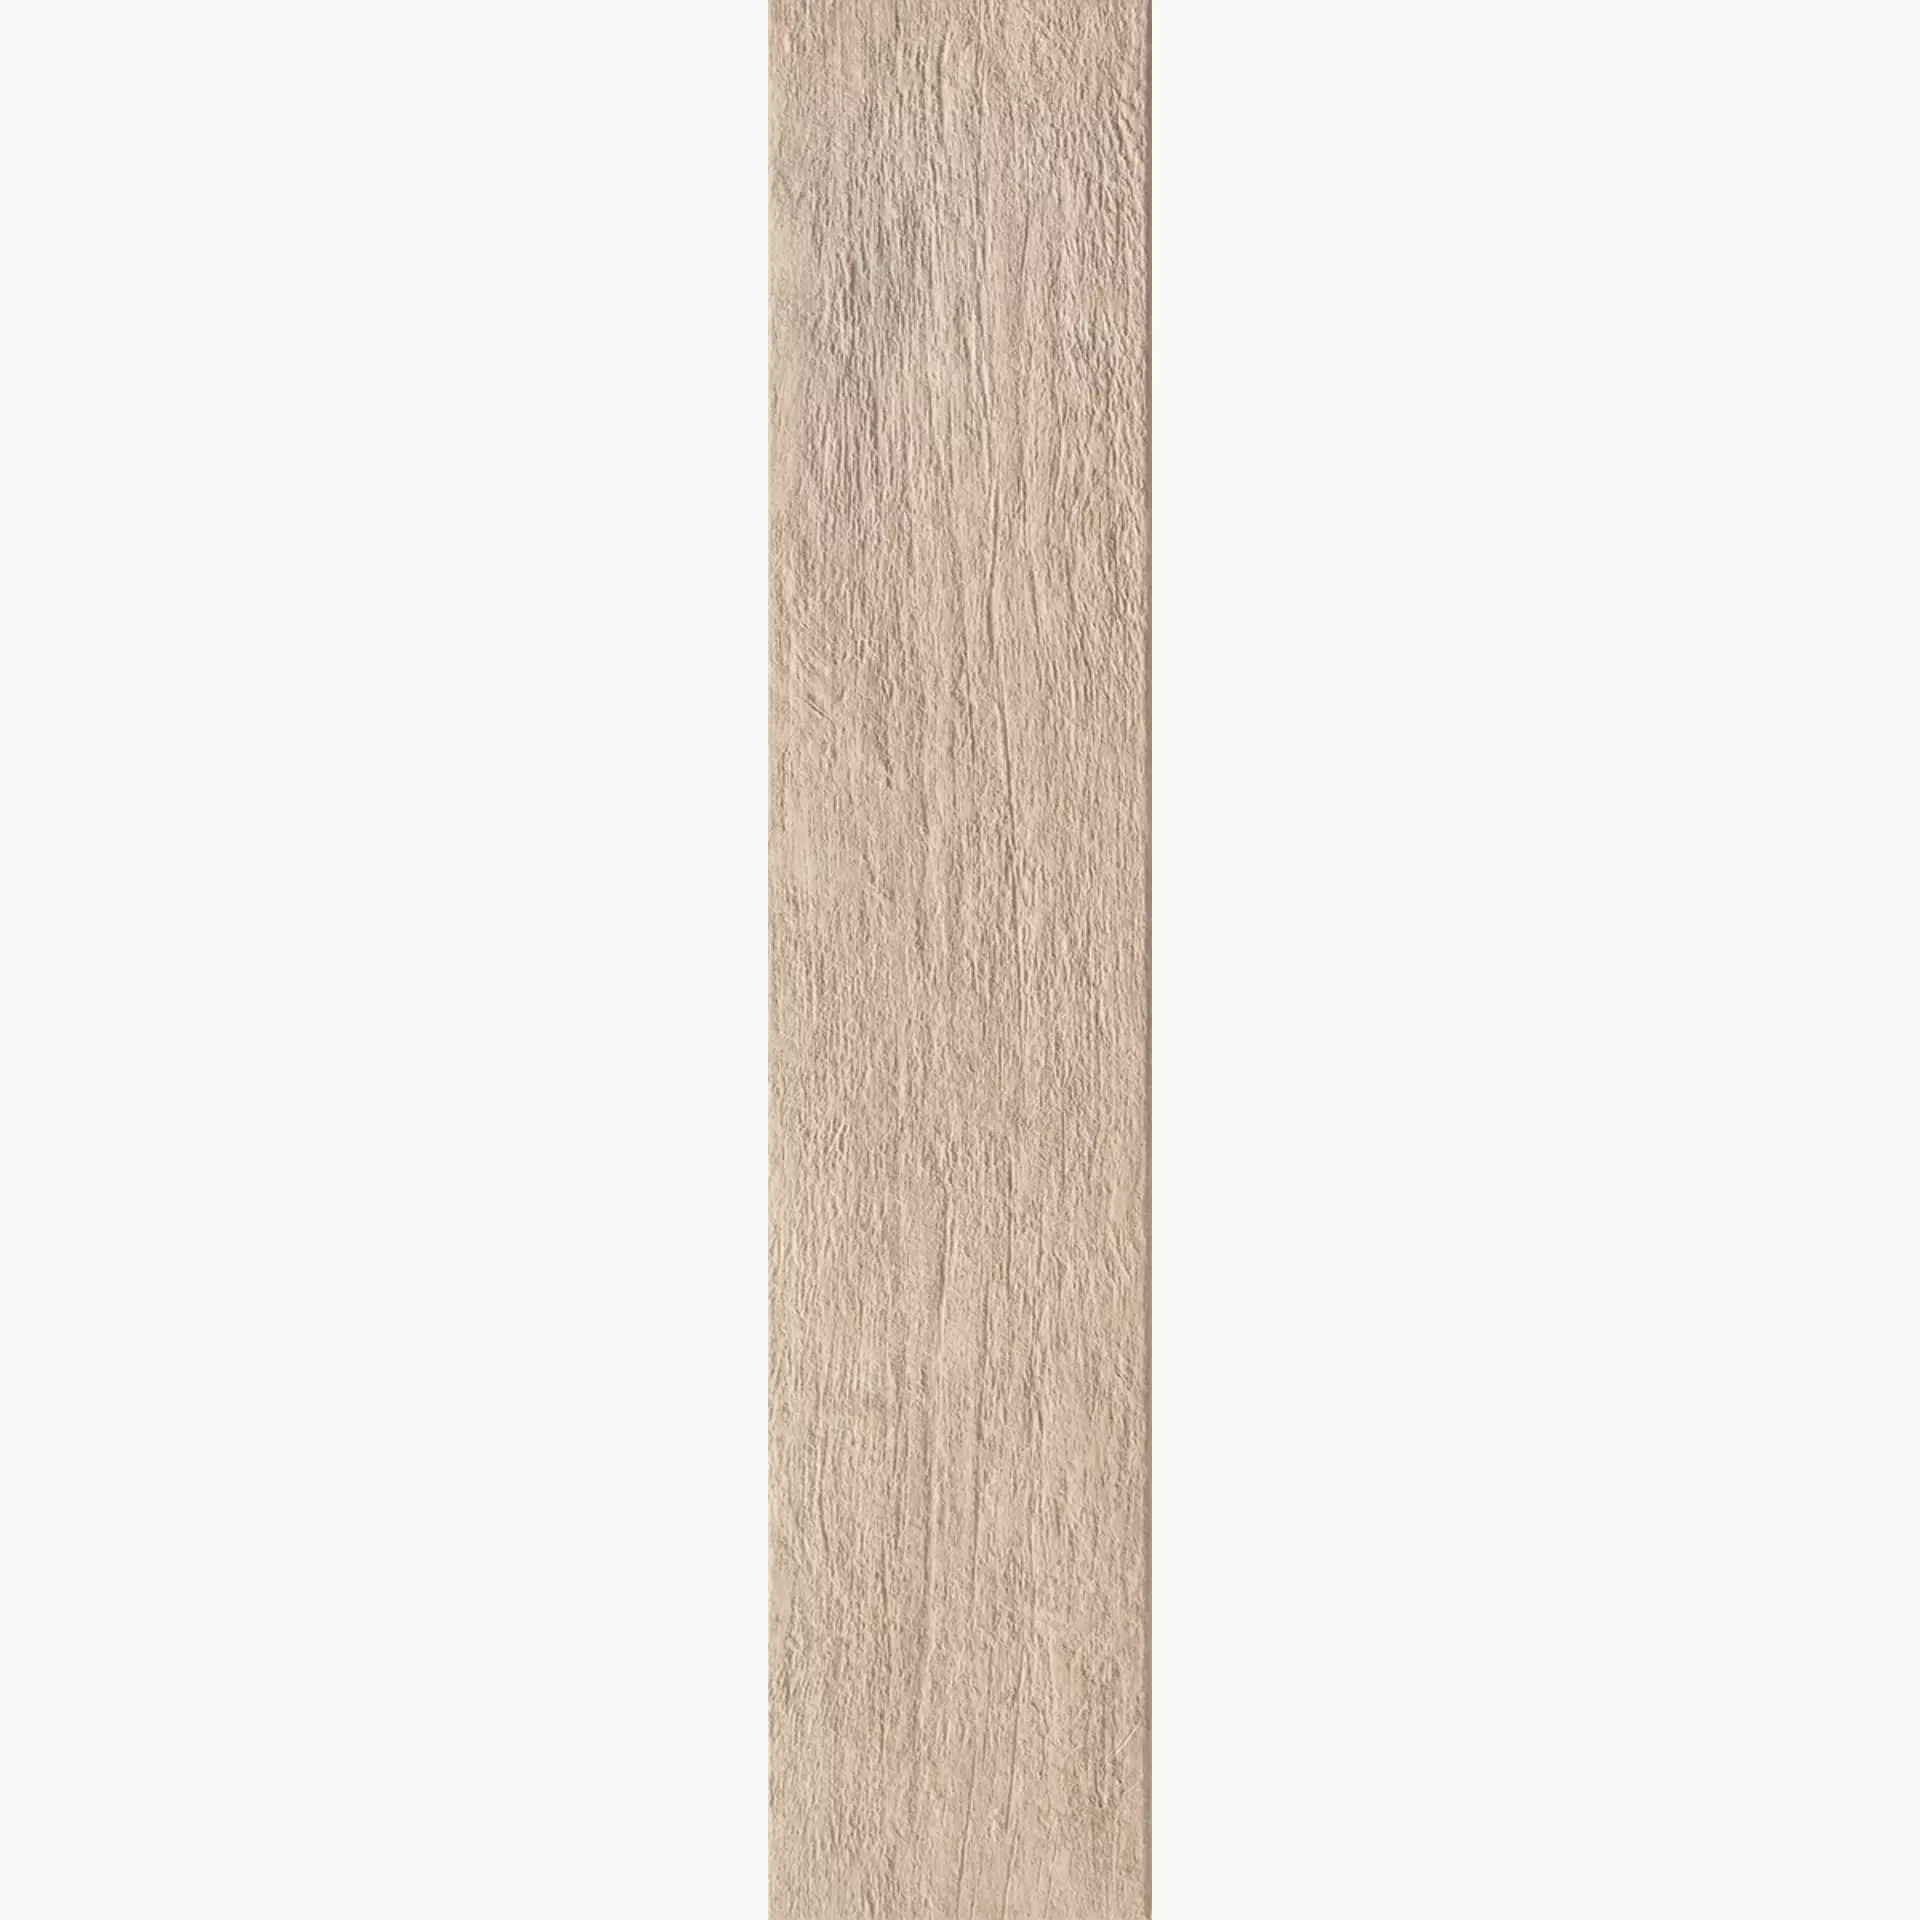 Rondine Greenwood Beige Strong J86706 24x120cm 9,5mm